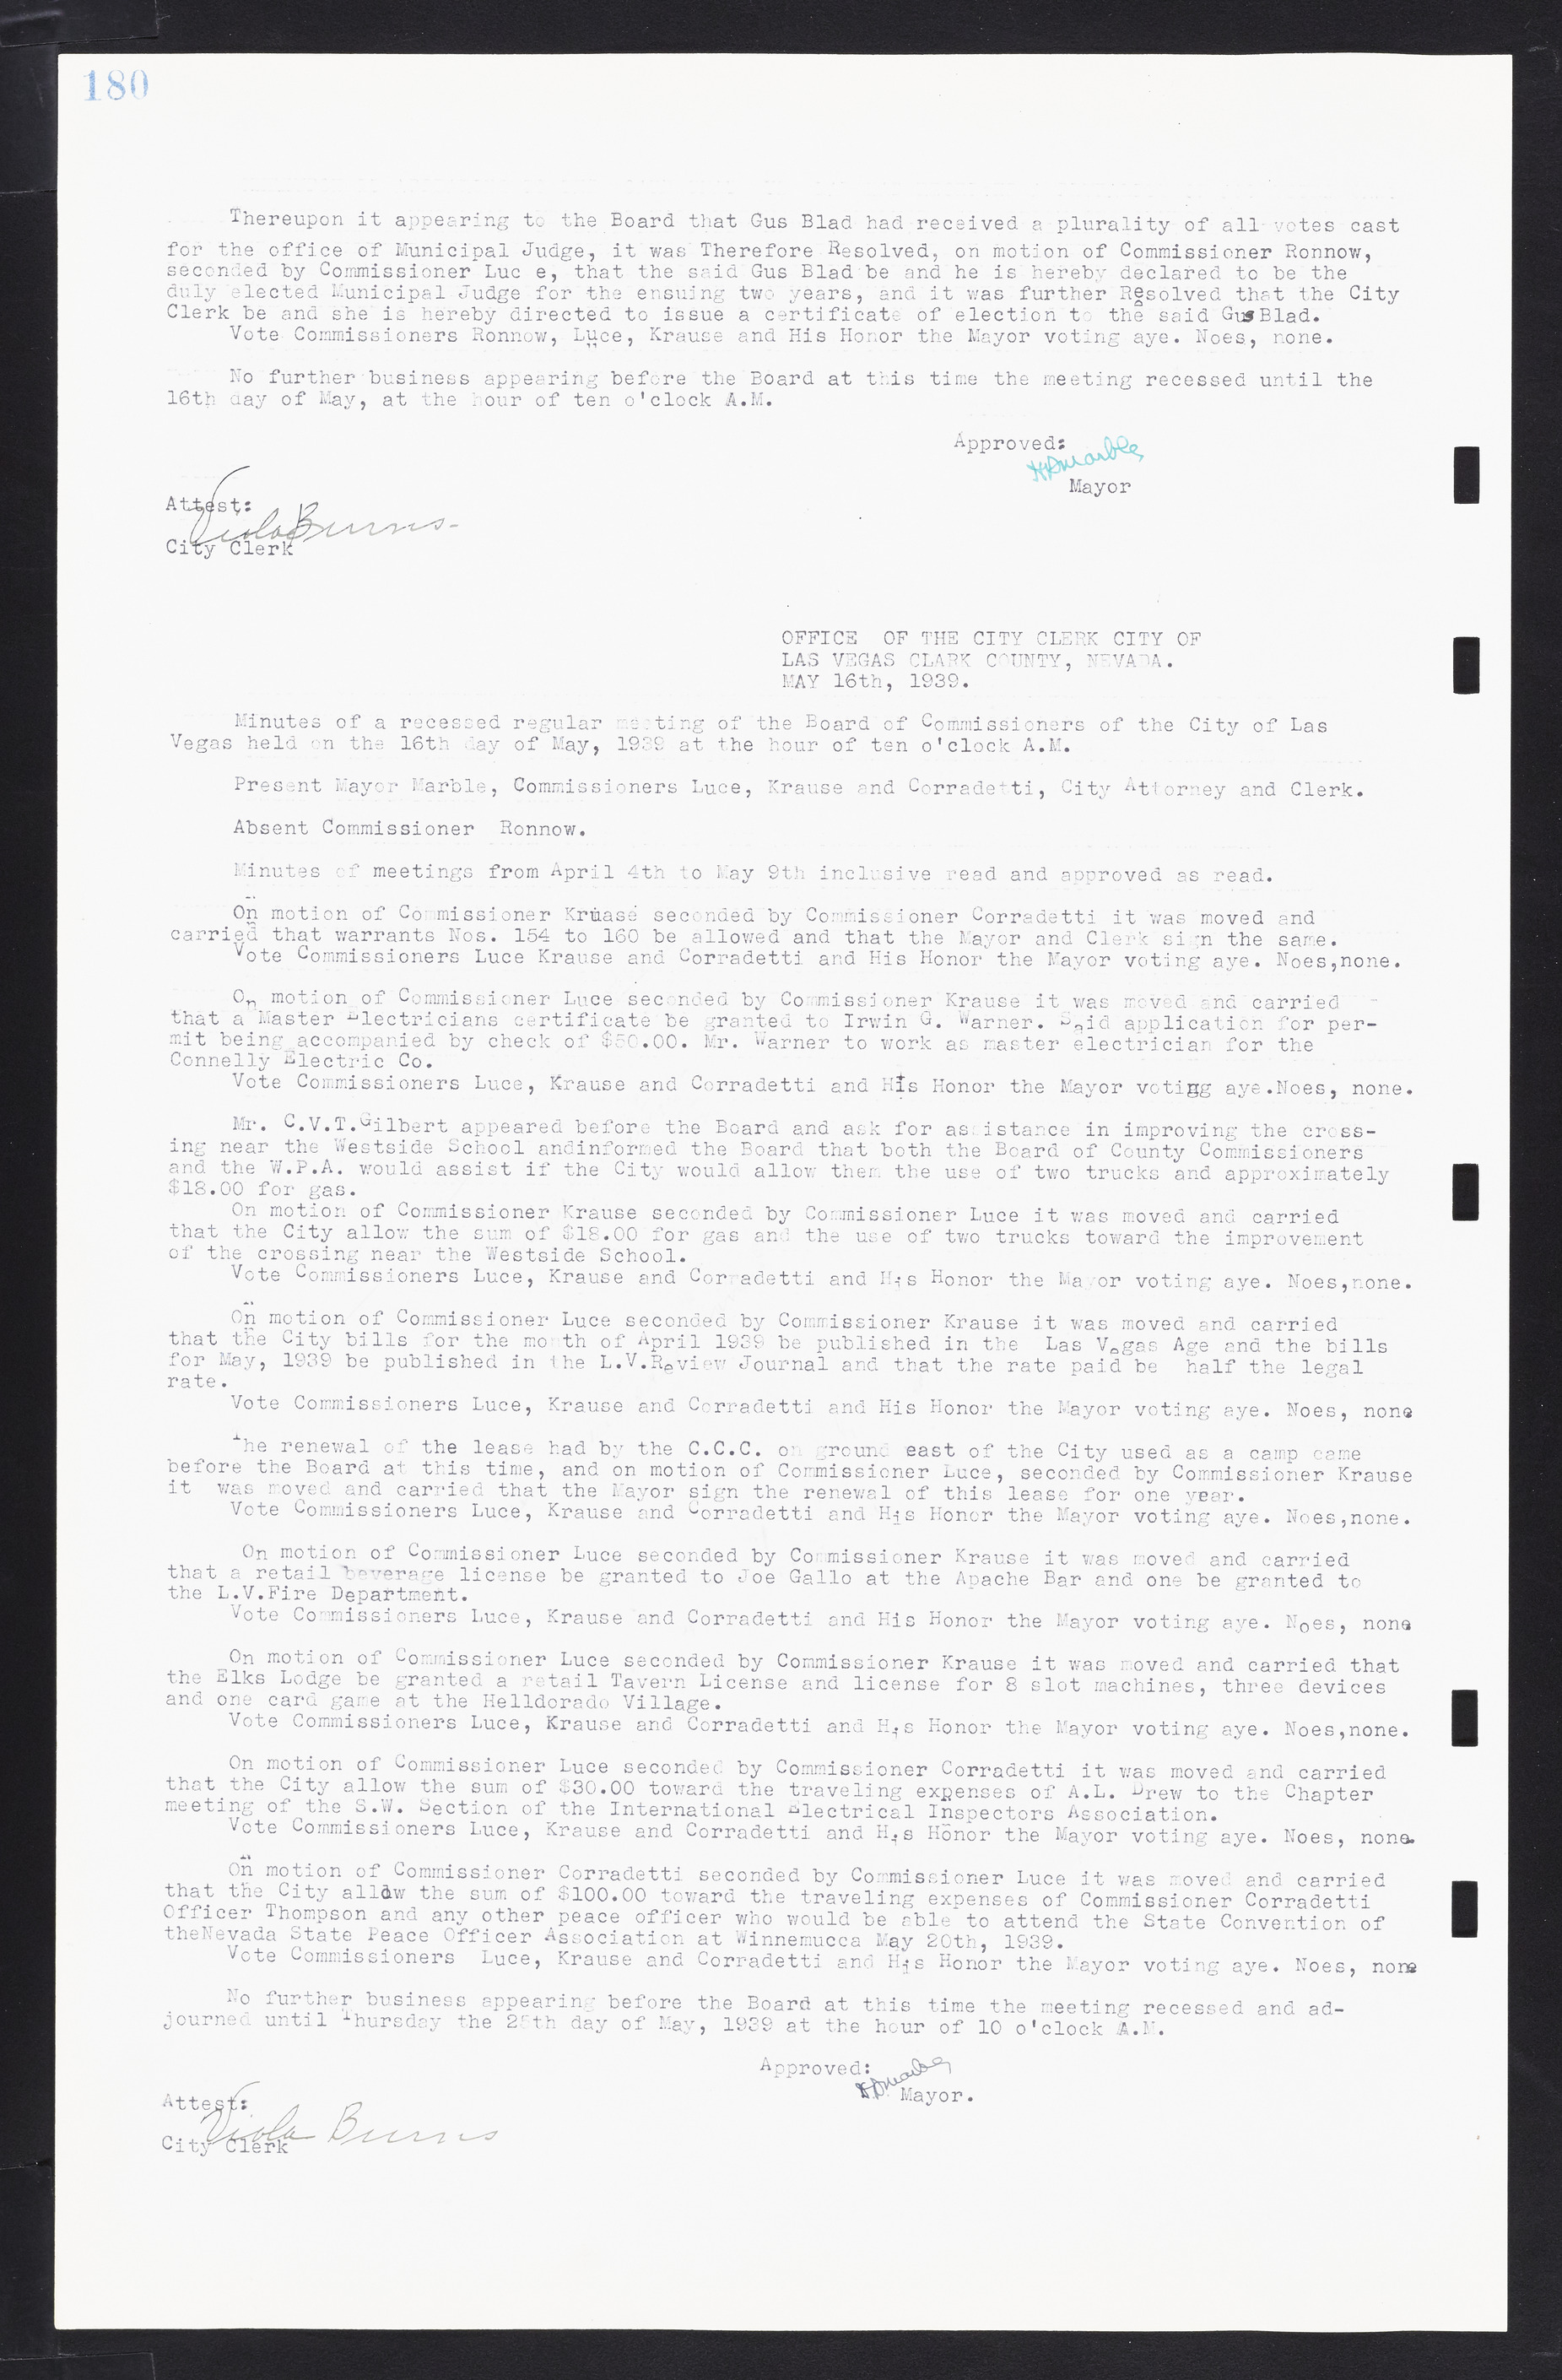 Las Vegas City Commission Minutes, February 17, 1937 to August 4, 1942, lvc000004-196